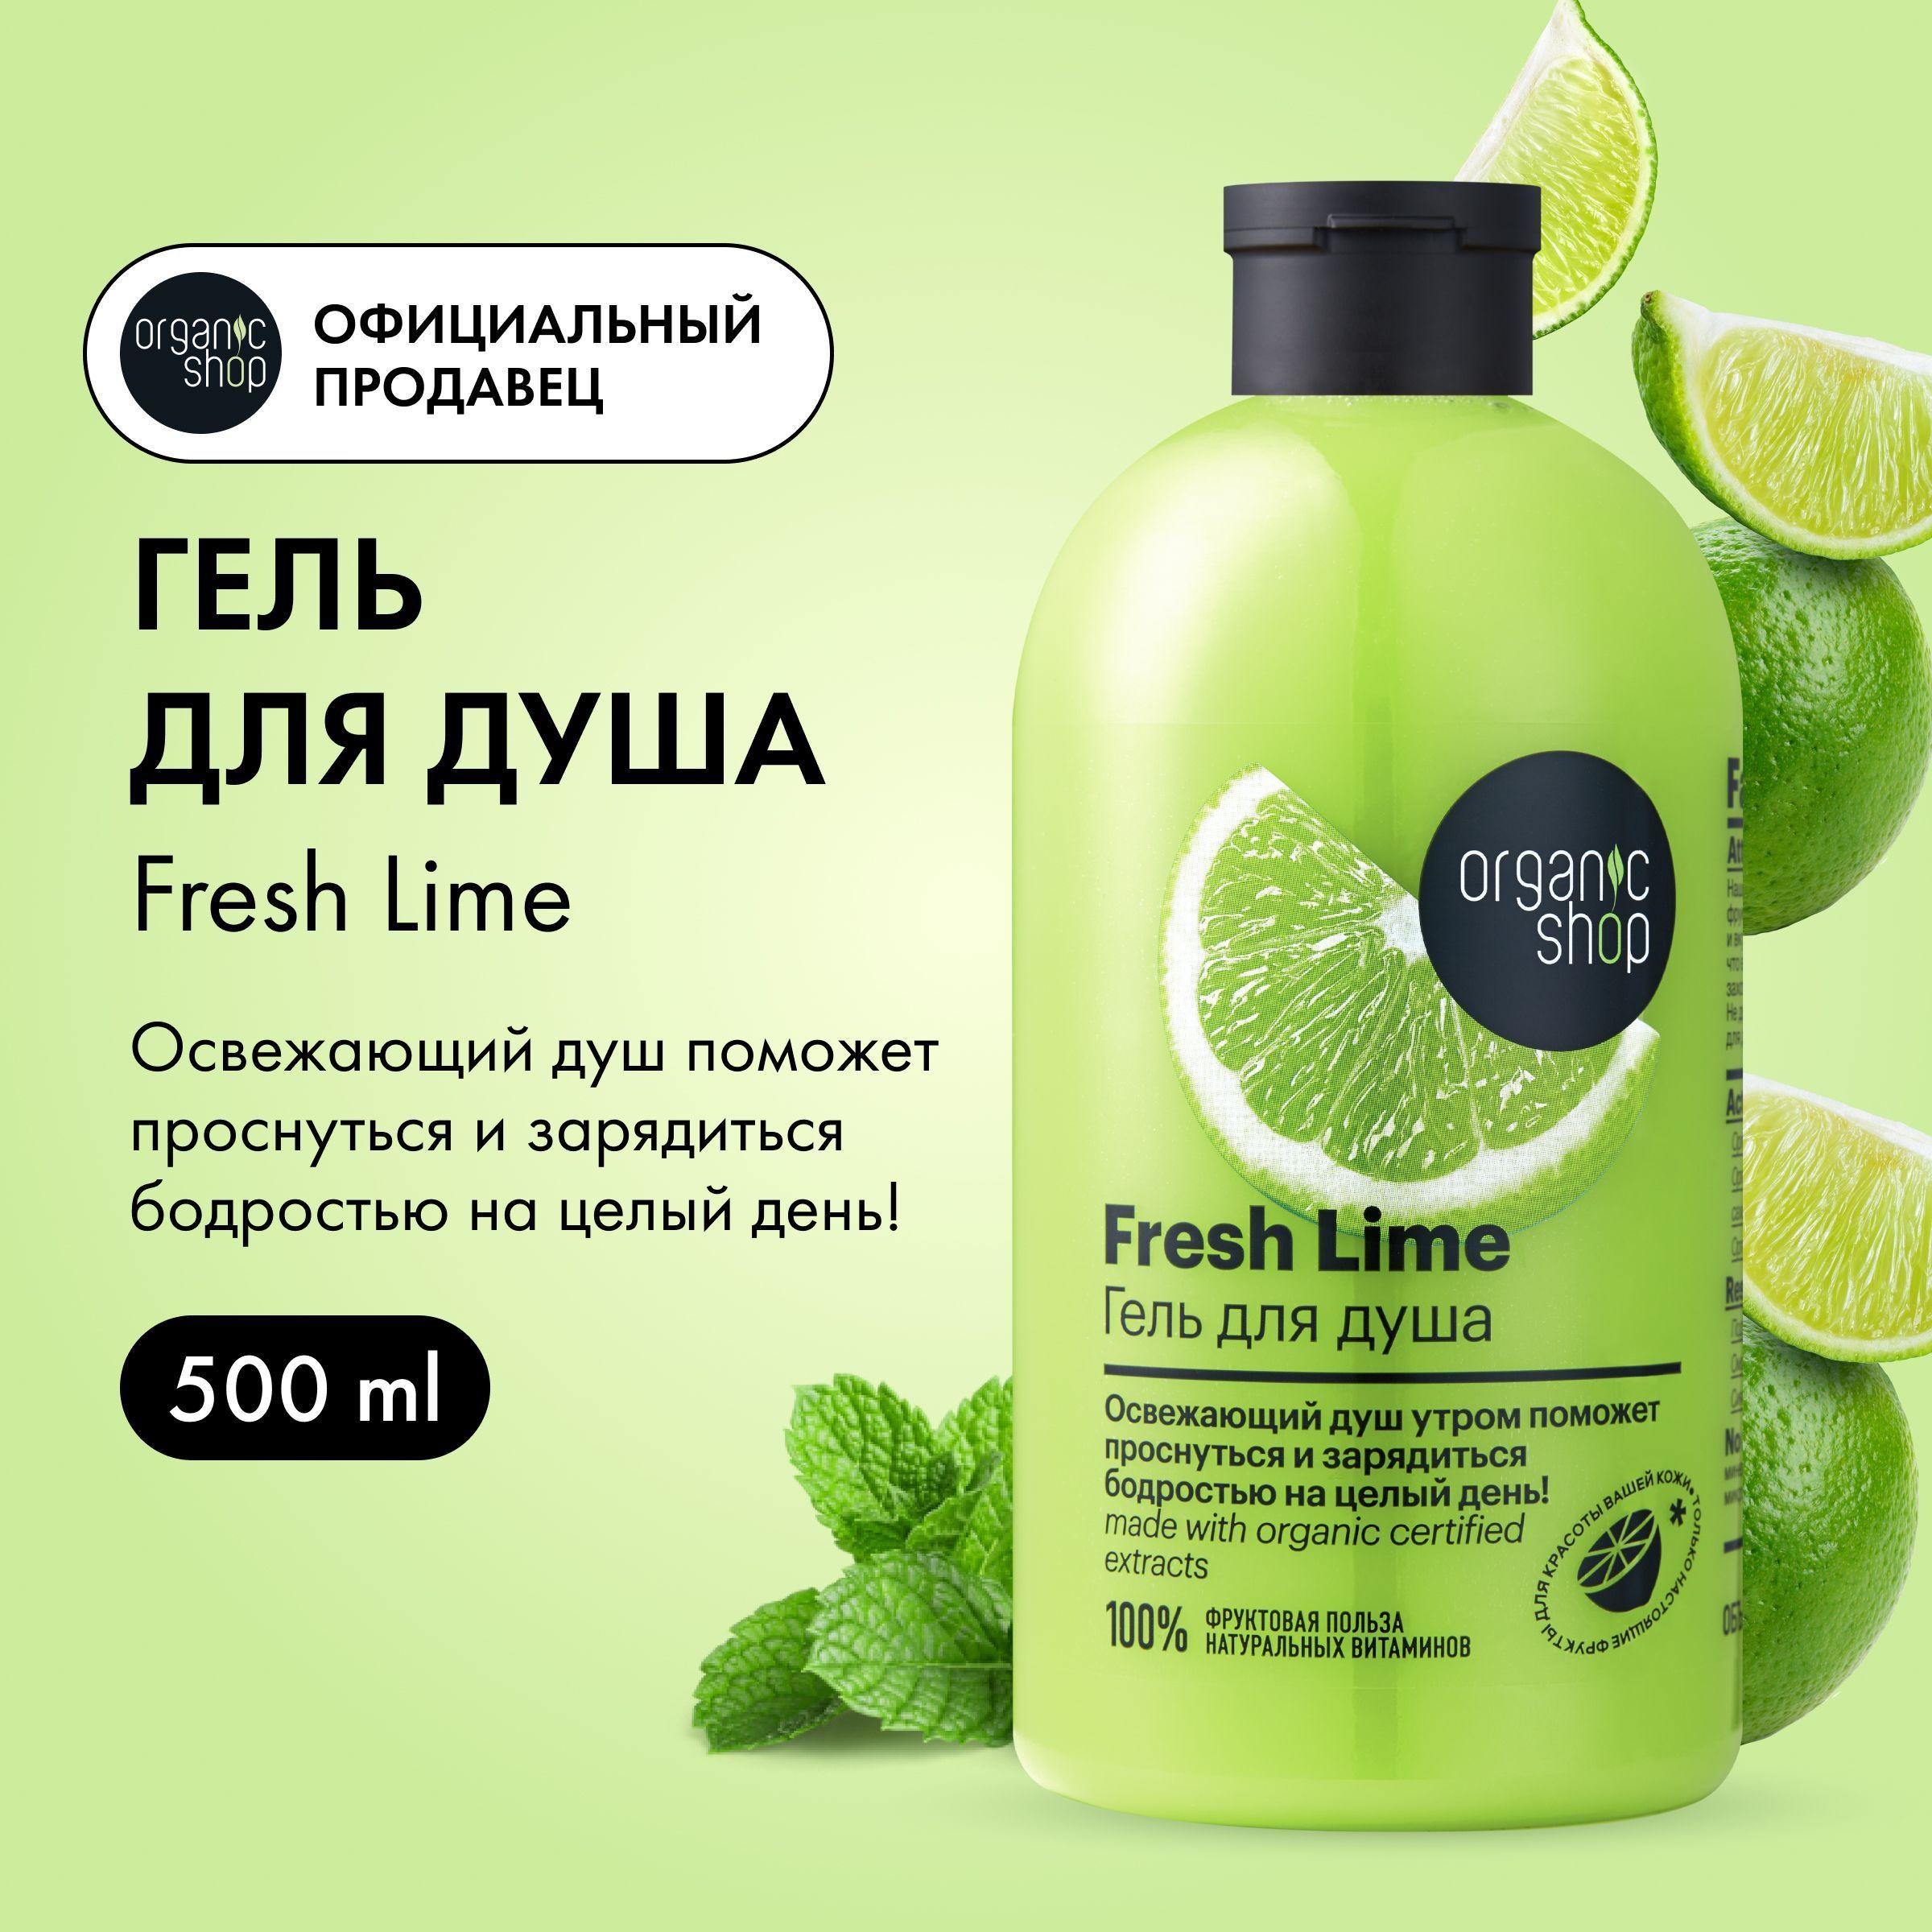 Organic Shop | Гель для душа Organic Shop HOME MADE Fresh Lime 500 мл